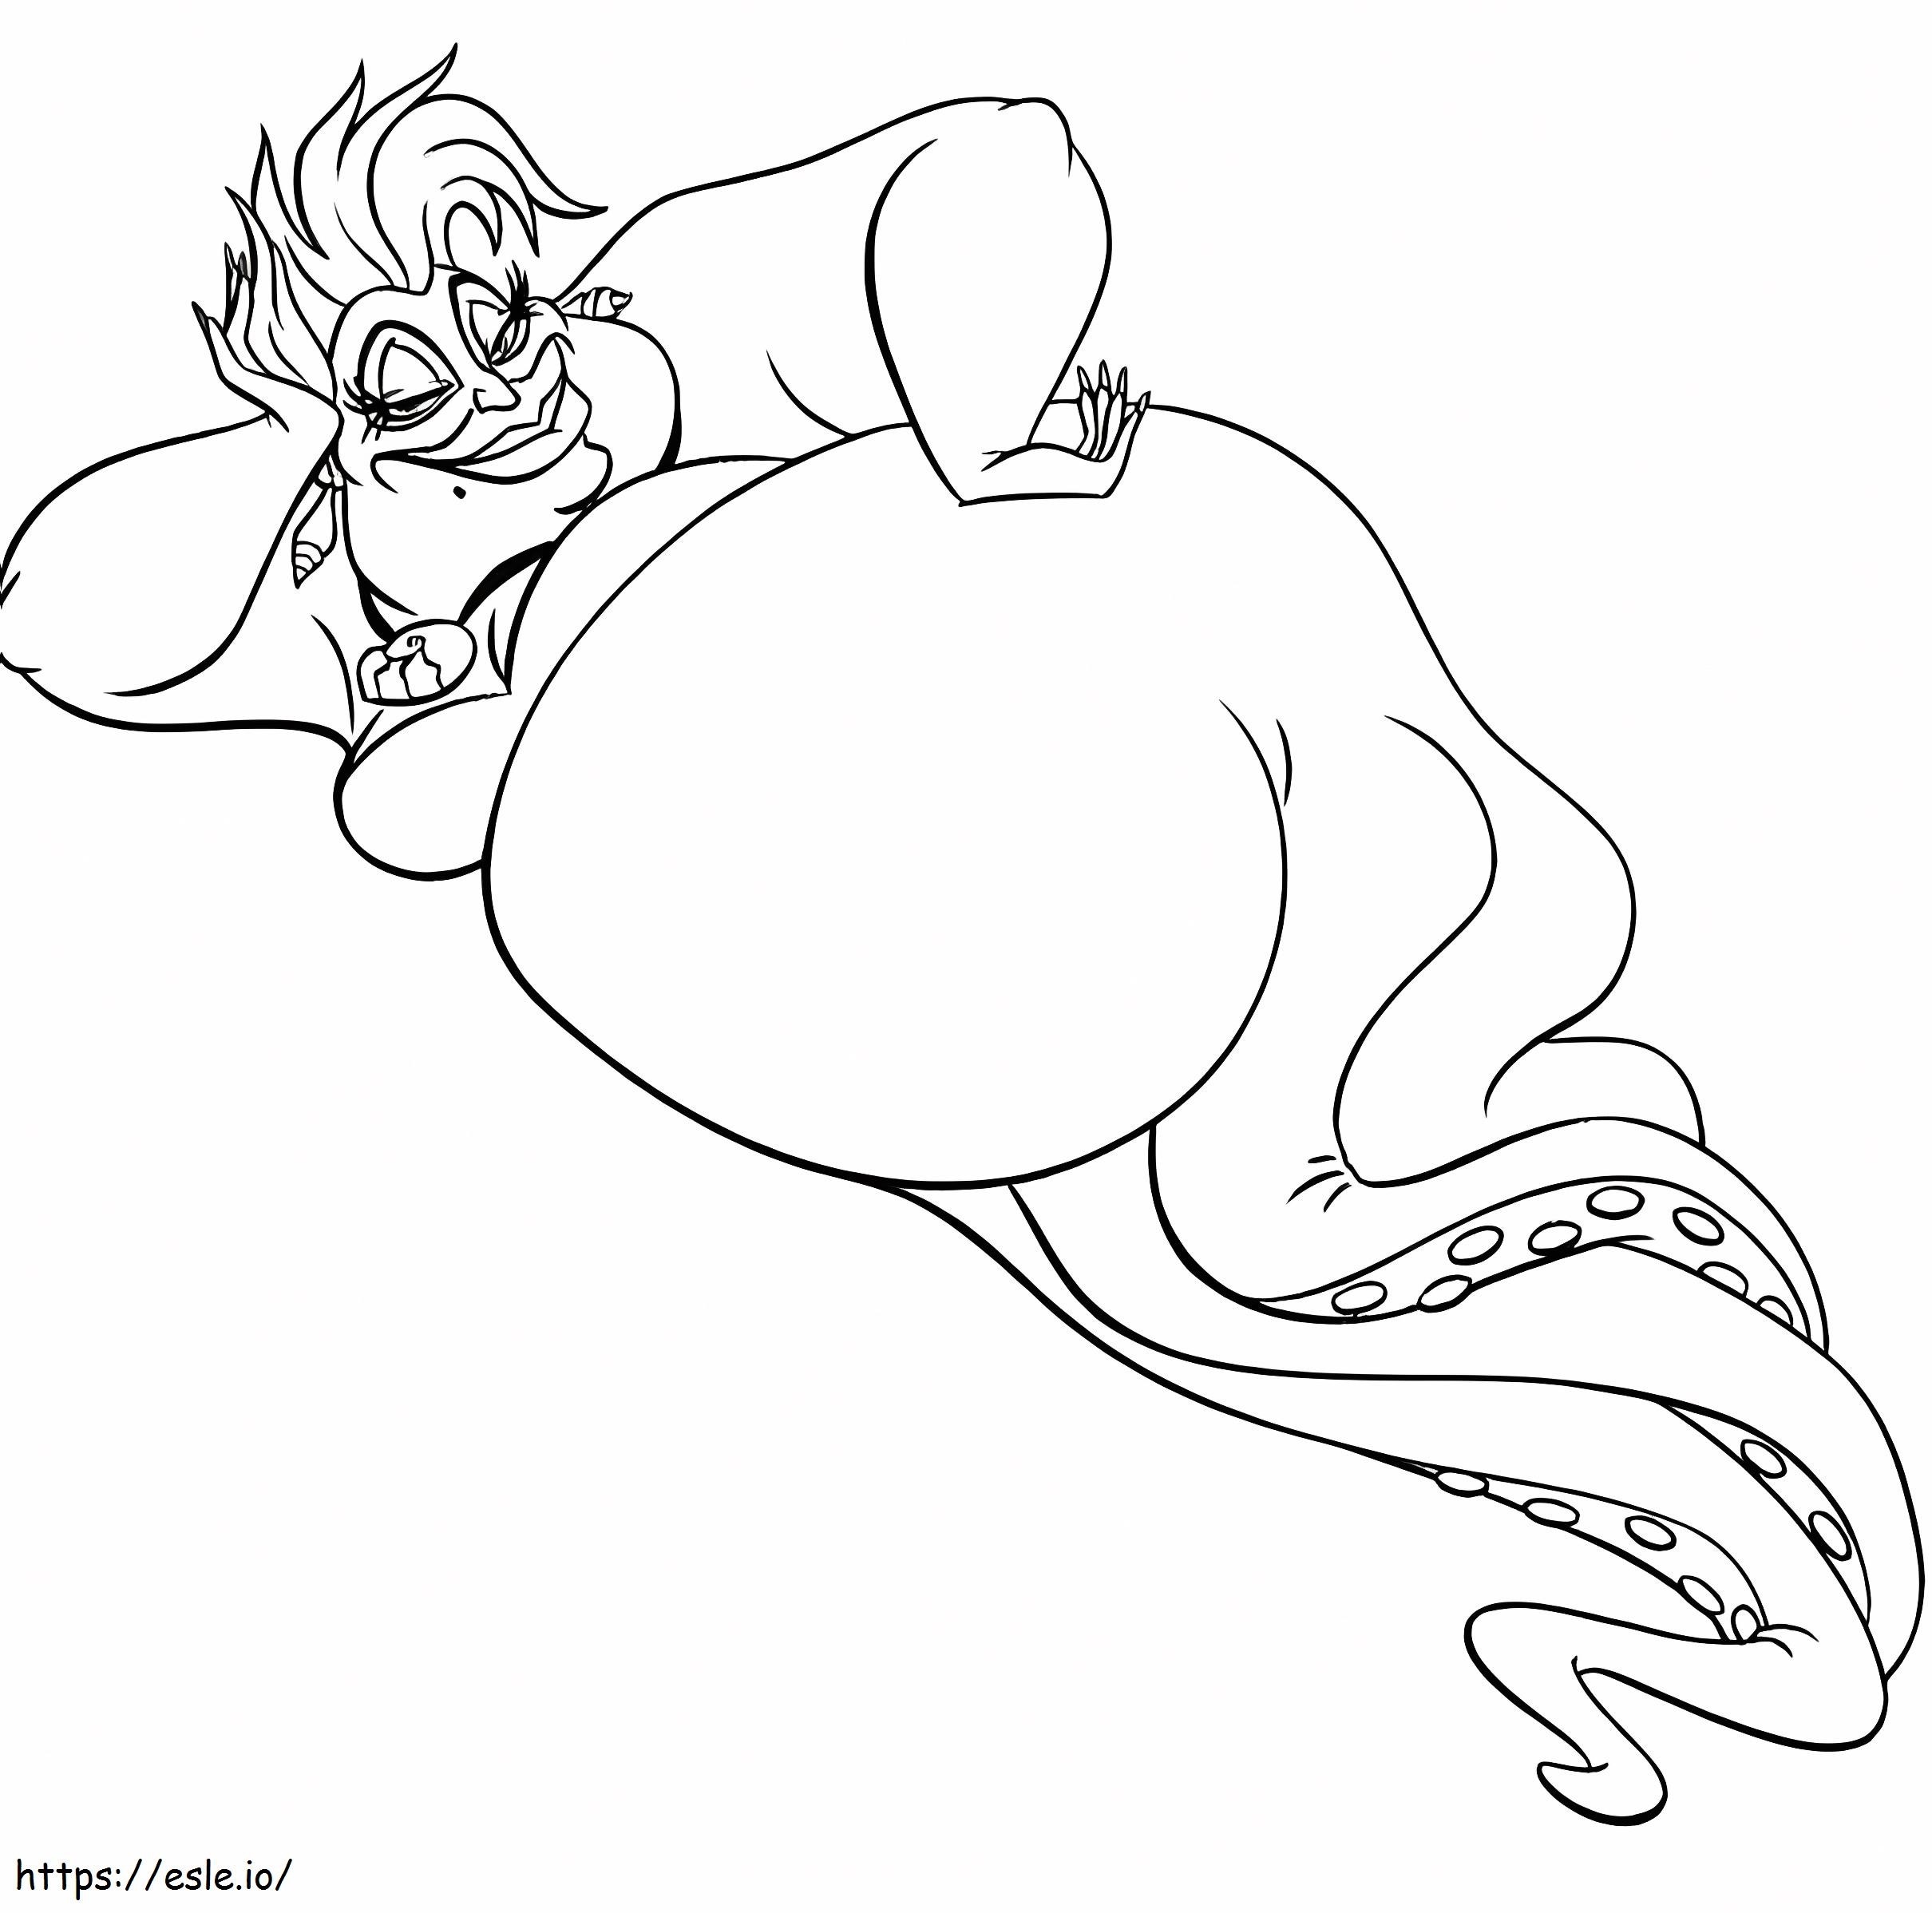 Ursula Disney Villain 1 coloring page